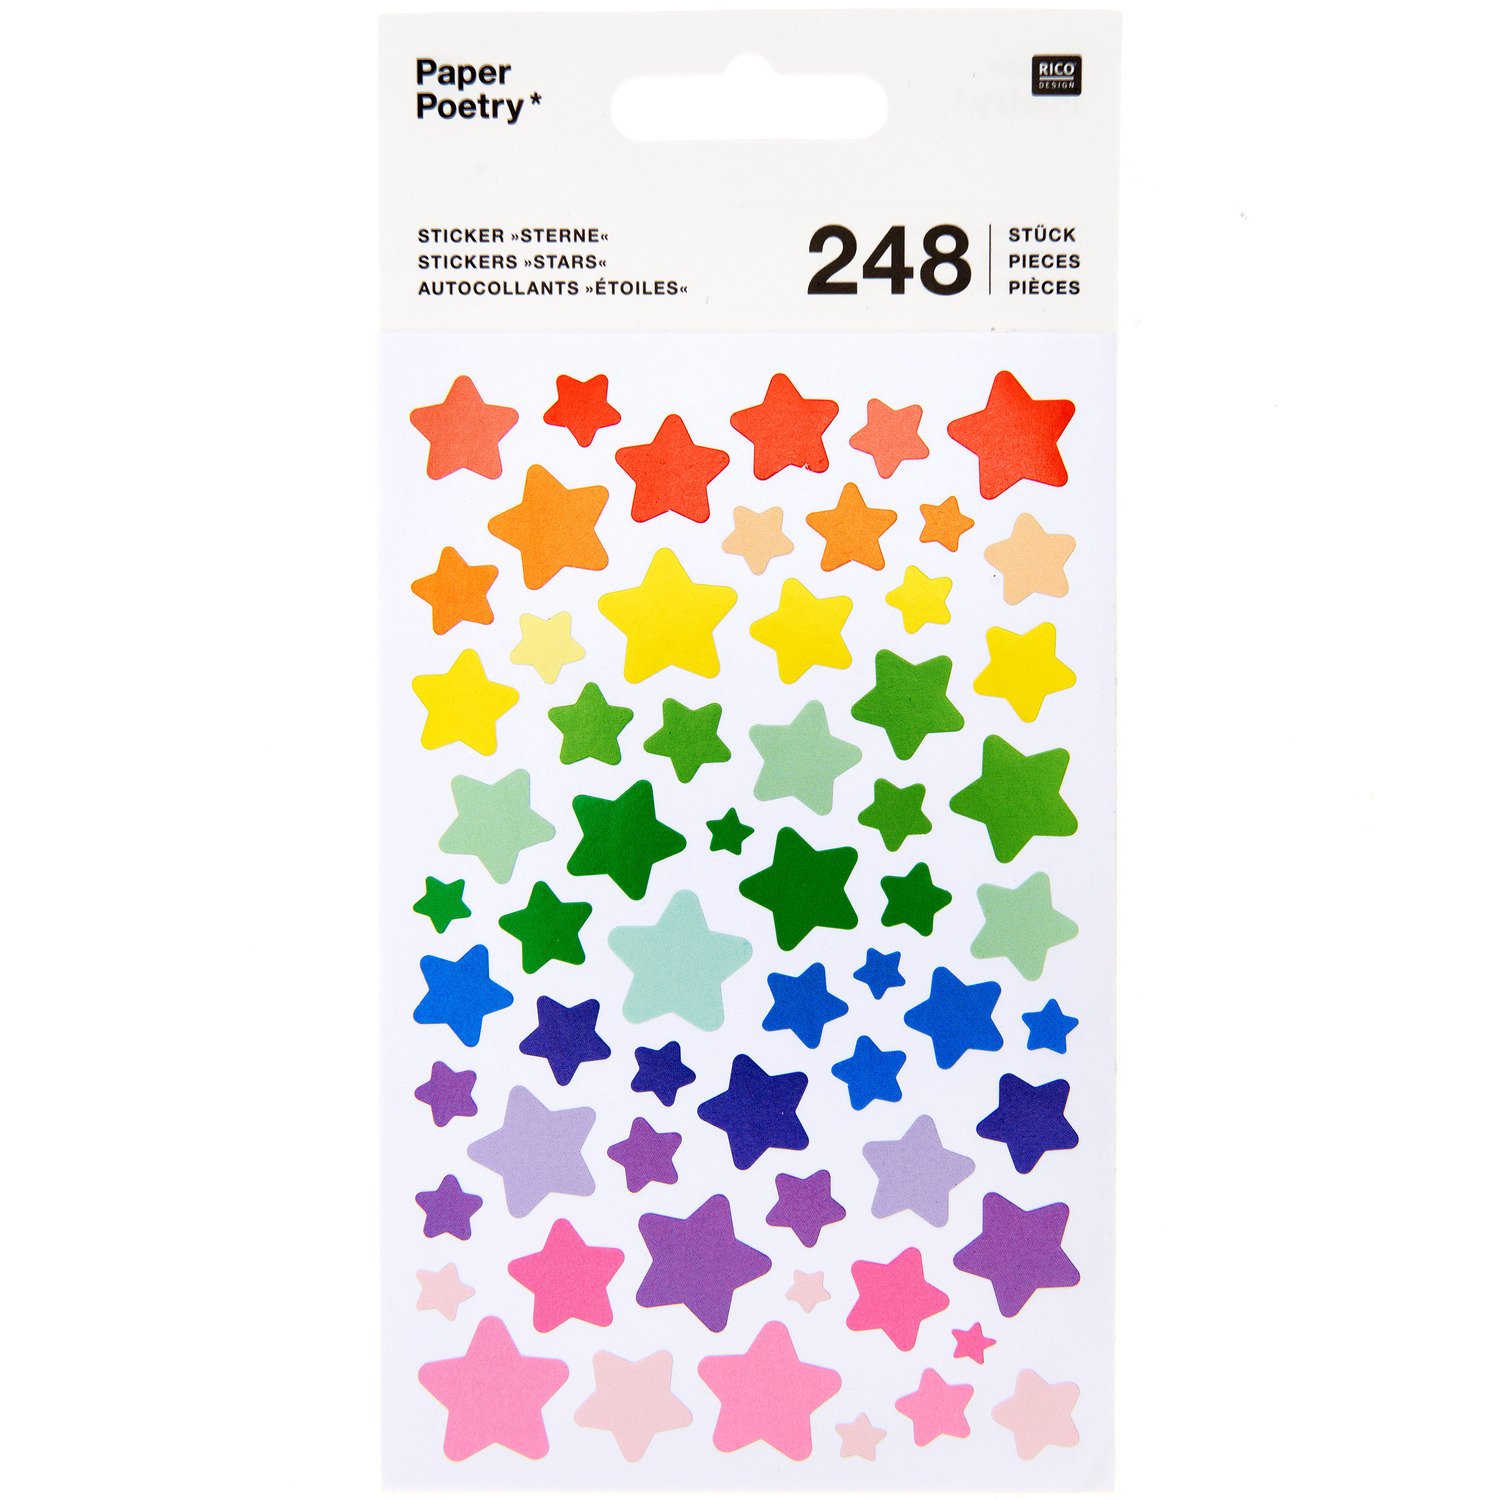 Paper Poetry Sticker Sterne mehrfarbig 10x19cm 4 Bogen